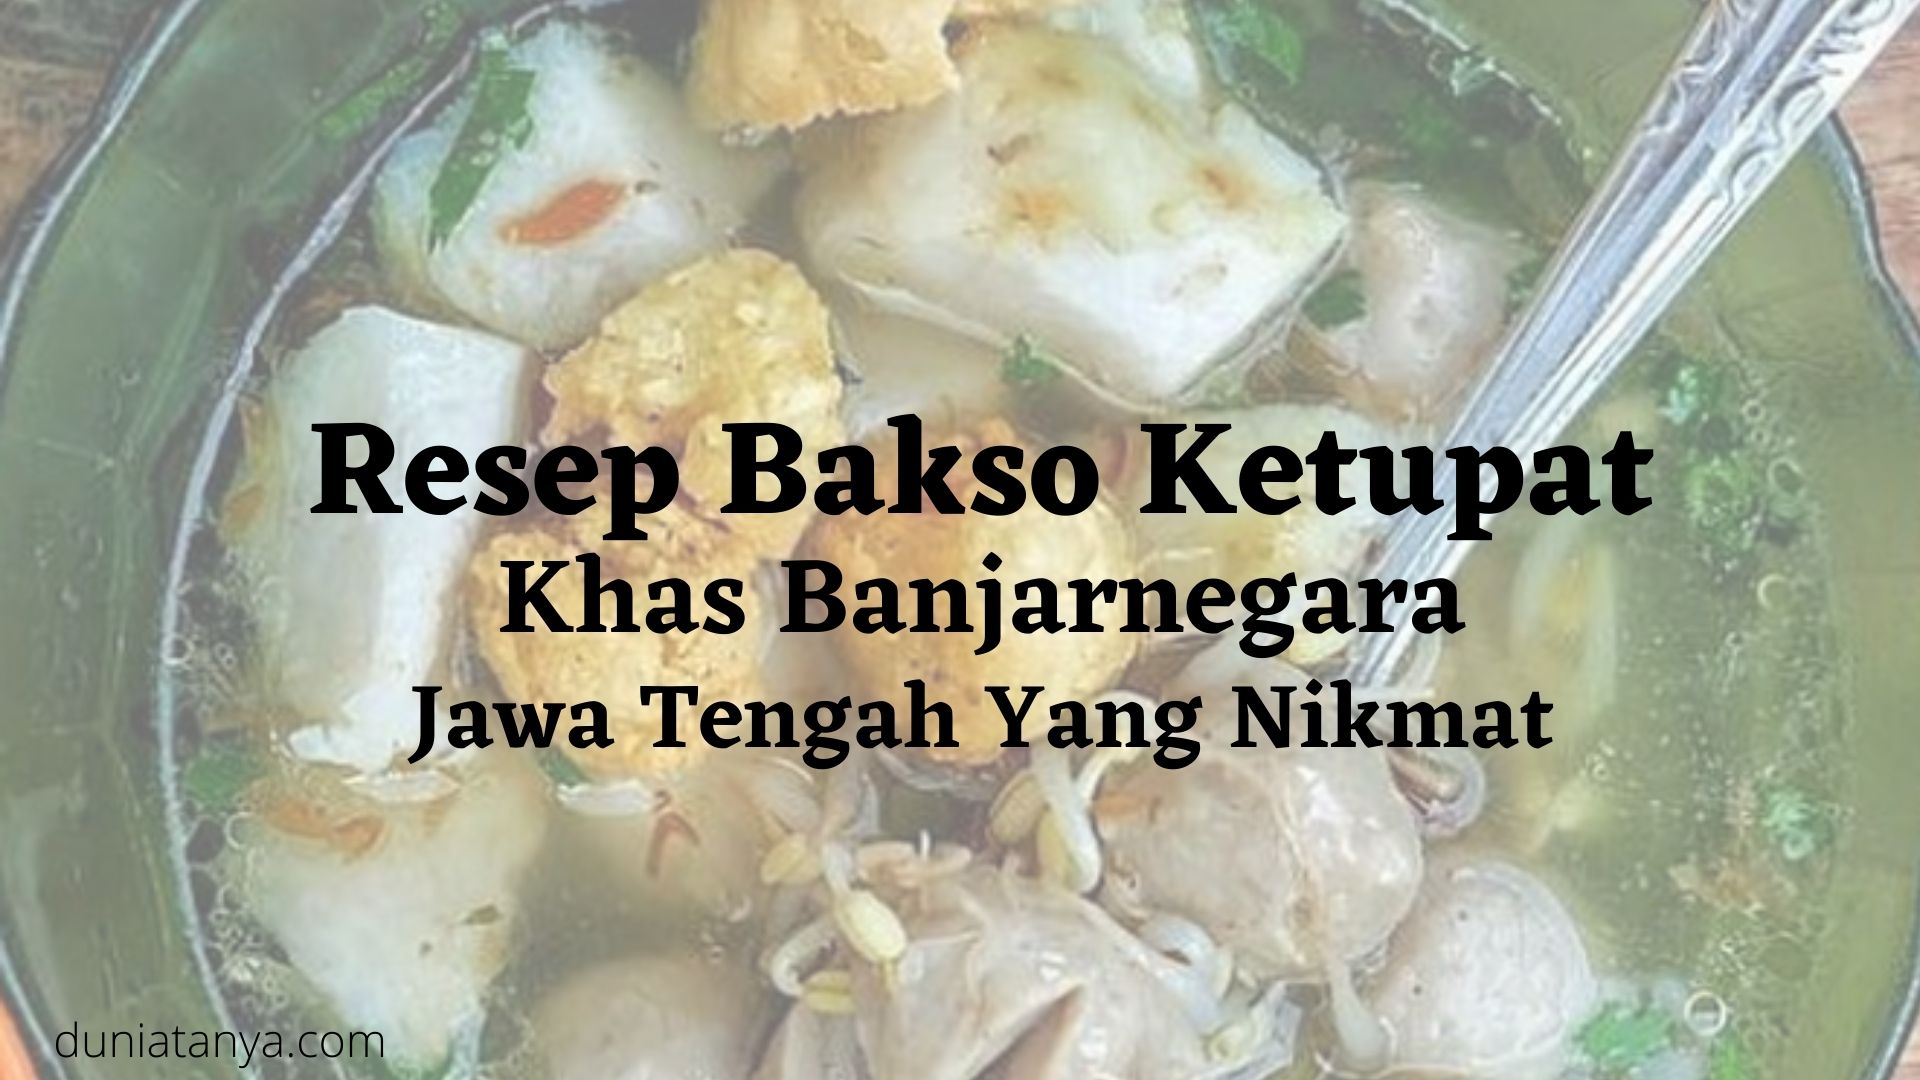 You are currently viewing Resep Bakso Ketupat Khas Banjarnegara Jawa Tengah Yang Nikmat